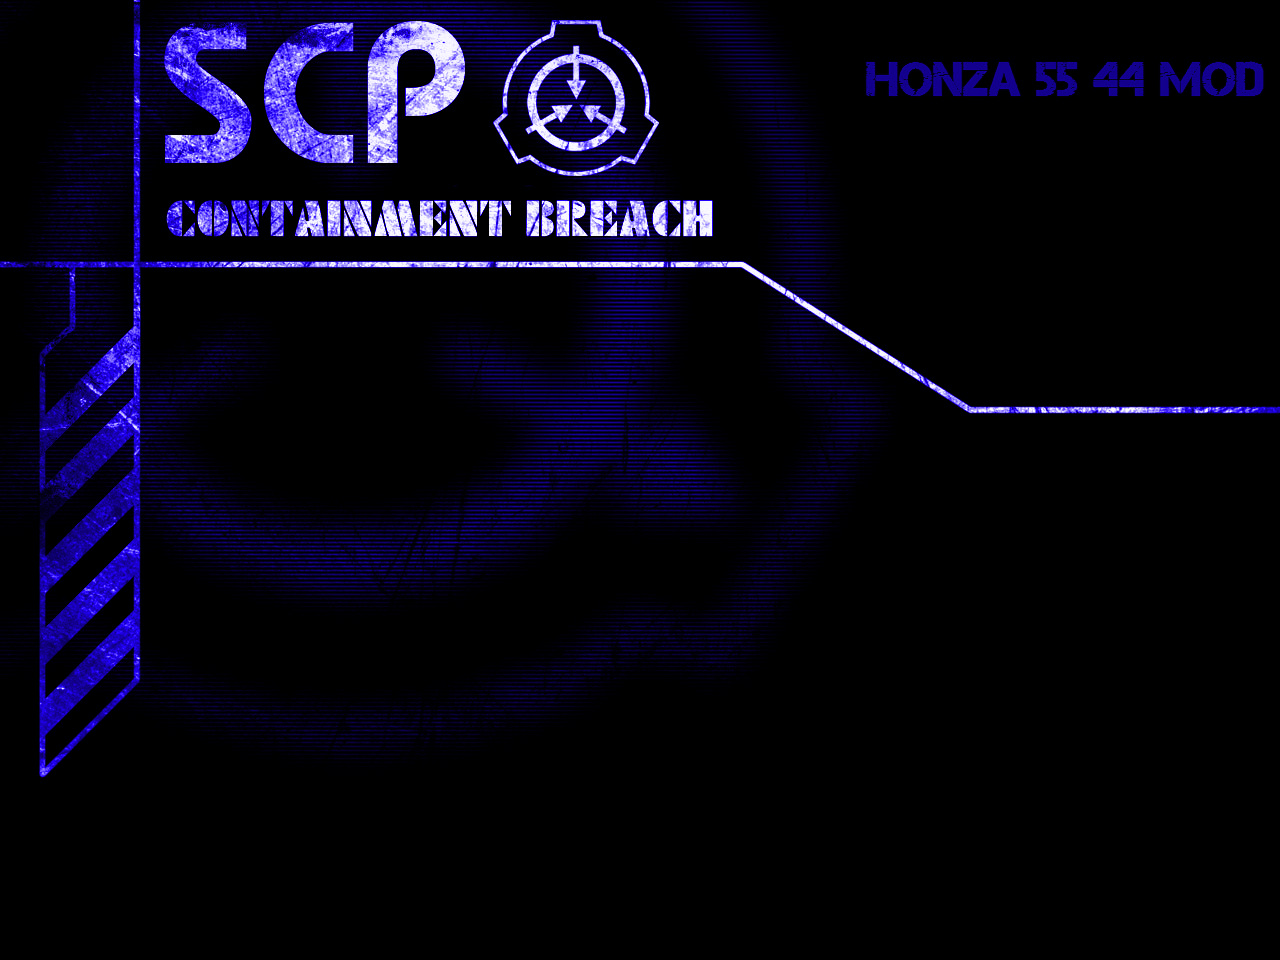 SCP Containment Breach Honza 55 44 mod file - Blitz MAX - Indie DB